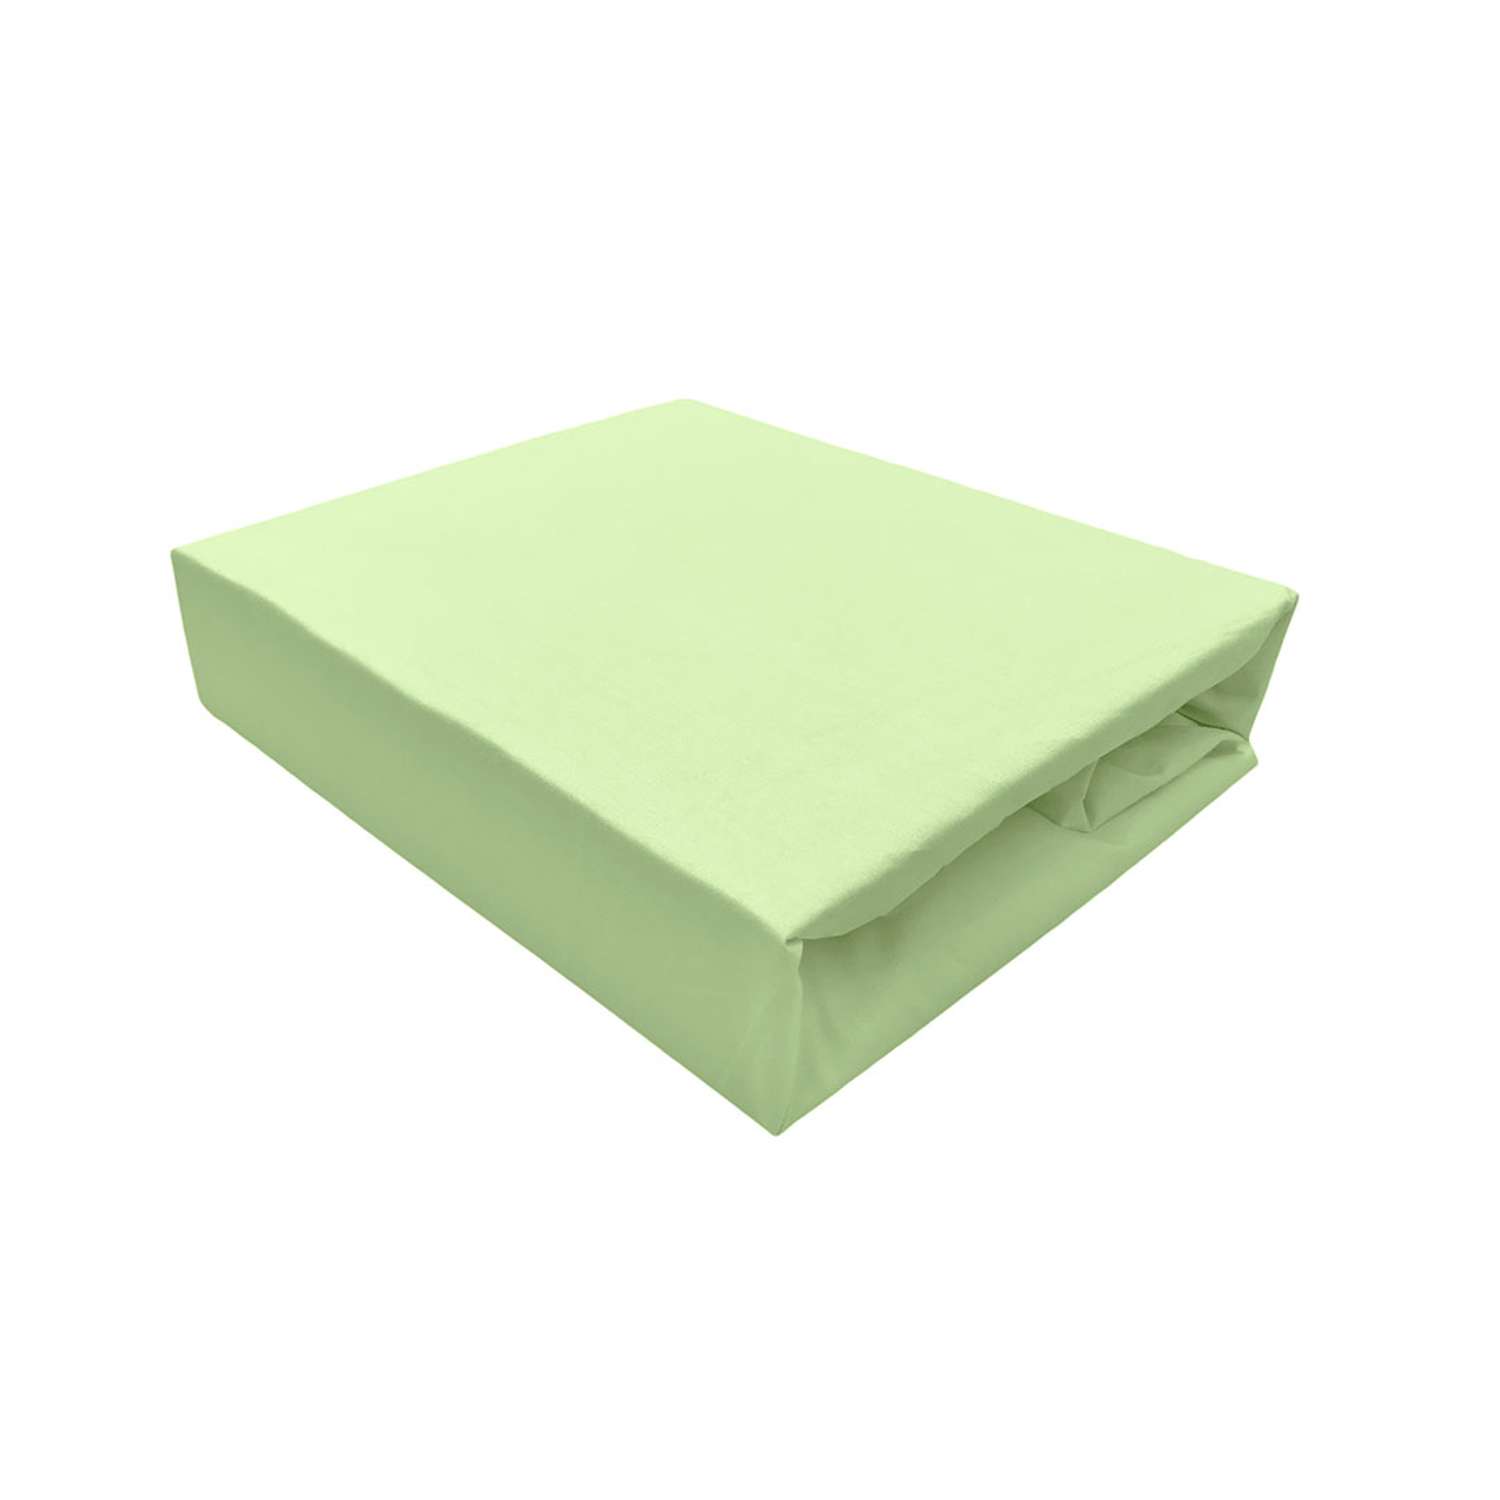 Простныня Primavelle на резинке из перкали 80х165х20 см светло-зеленая - фото 3